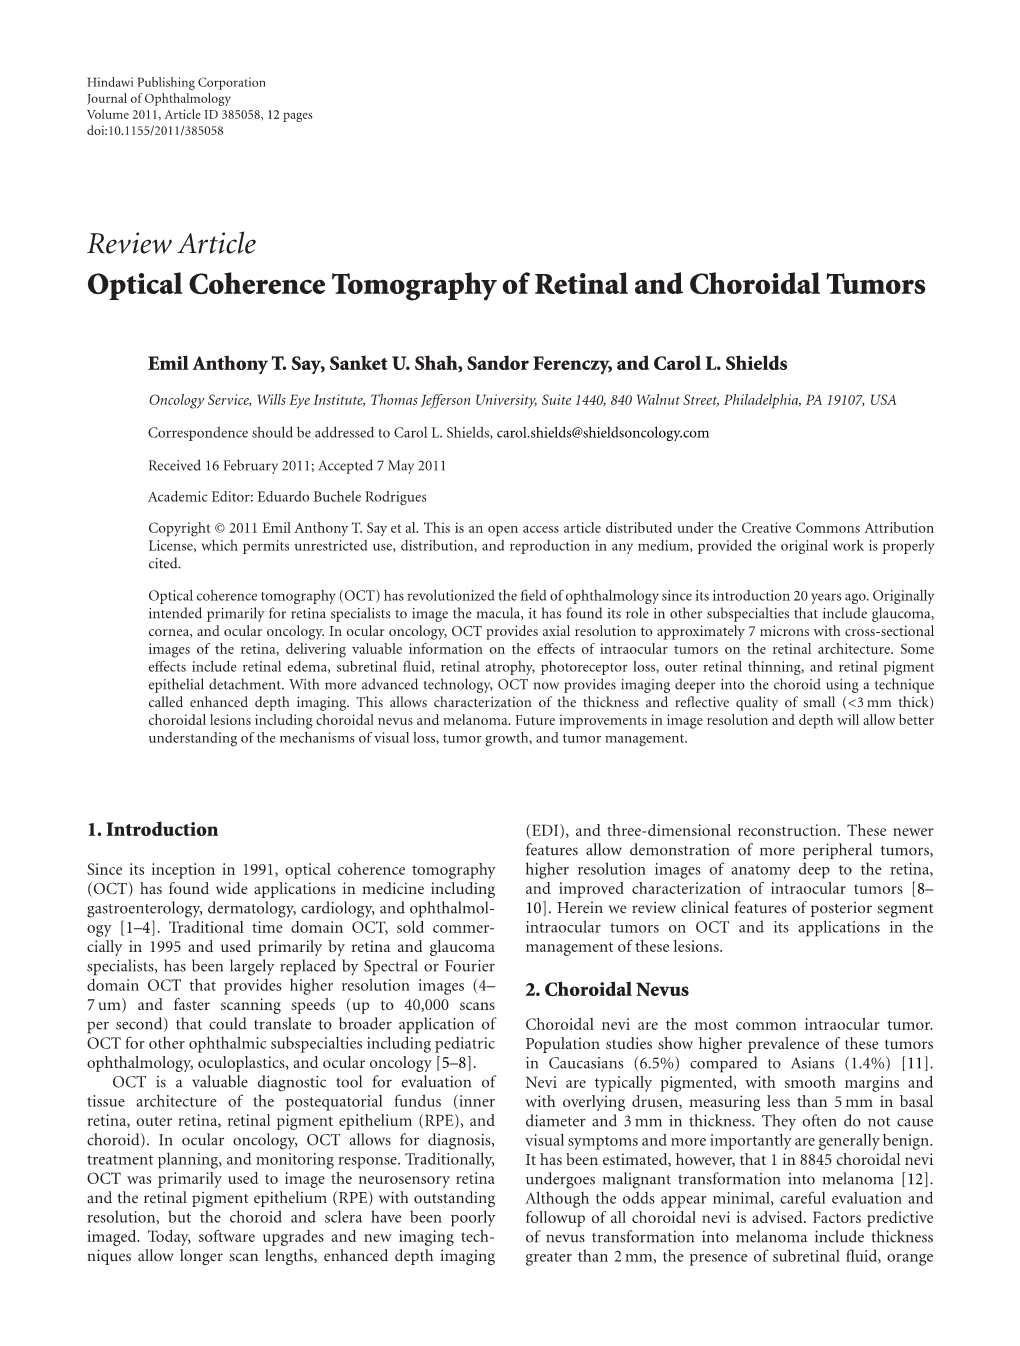 Review Article Optical Coherence Tomography of Retinal and Choroidal Tumors